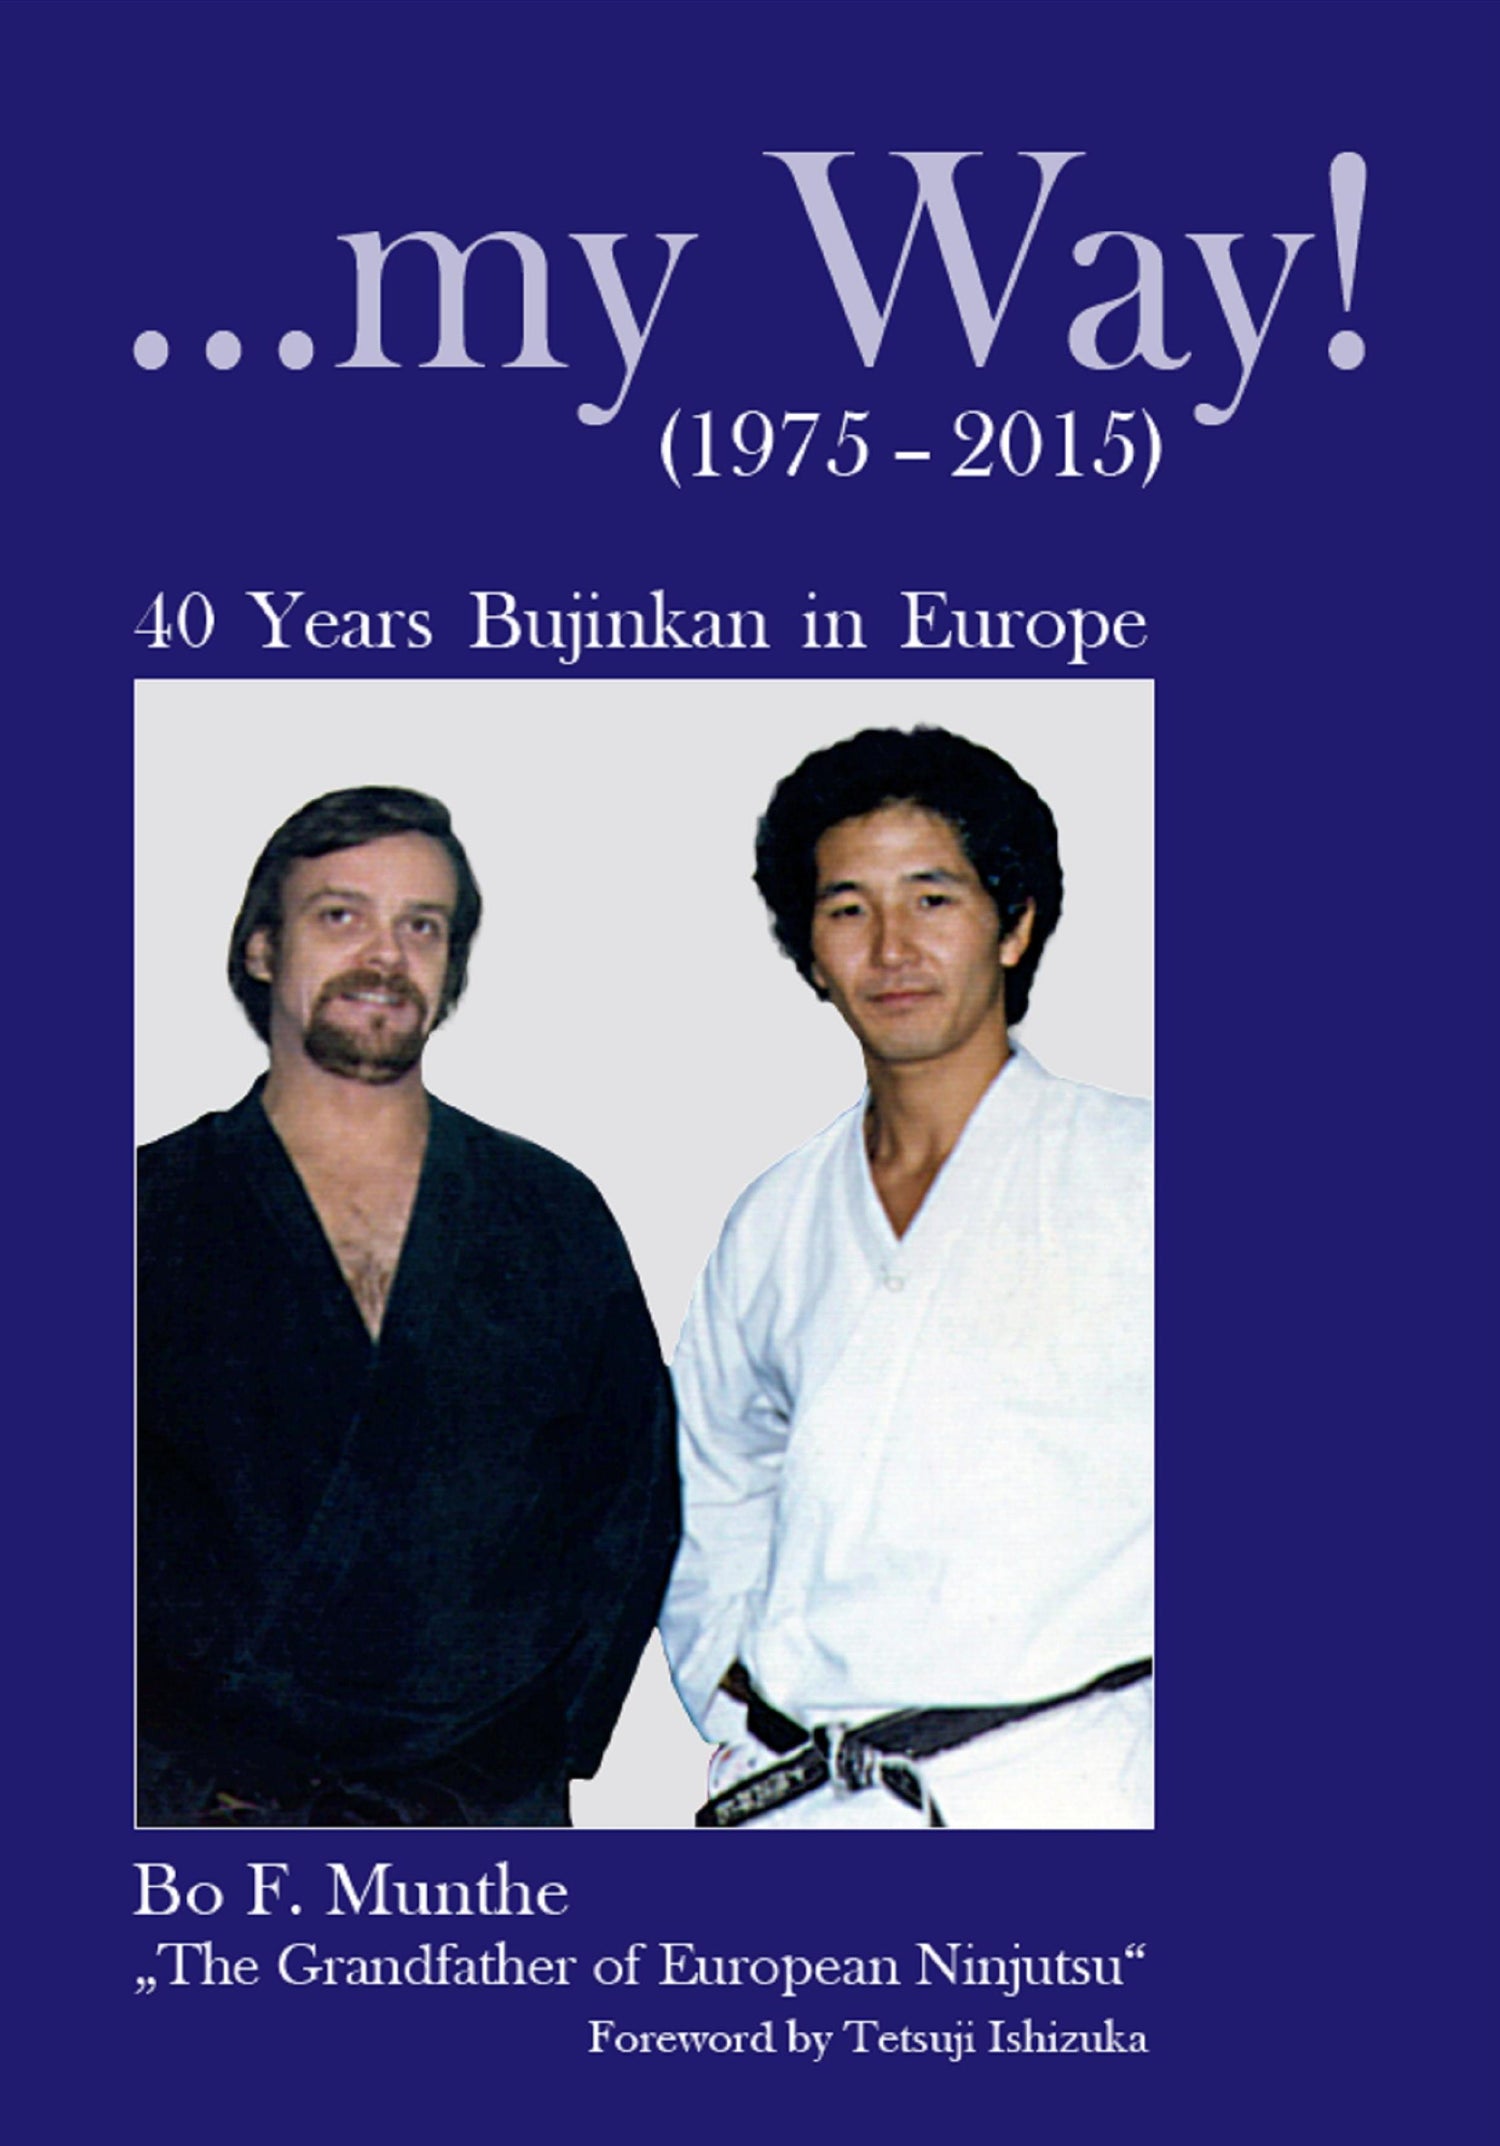 My Way: 40 Years of Bujinkan in Europe Book by Bo Munthe - Budovideos Inc